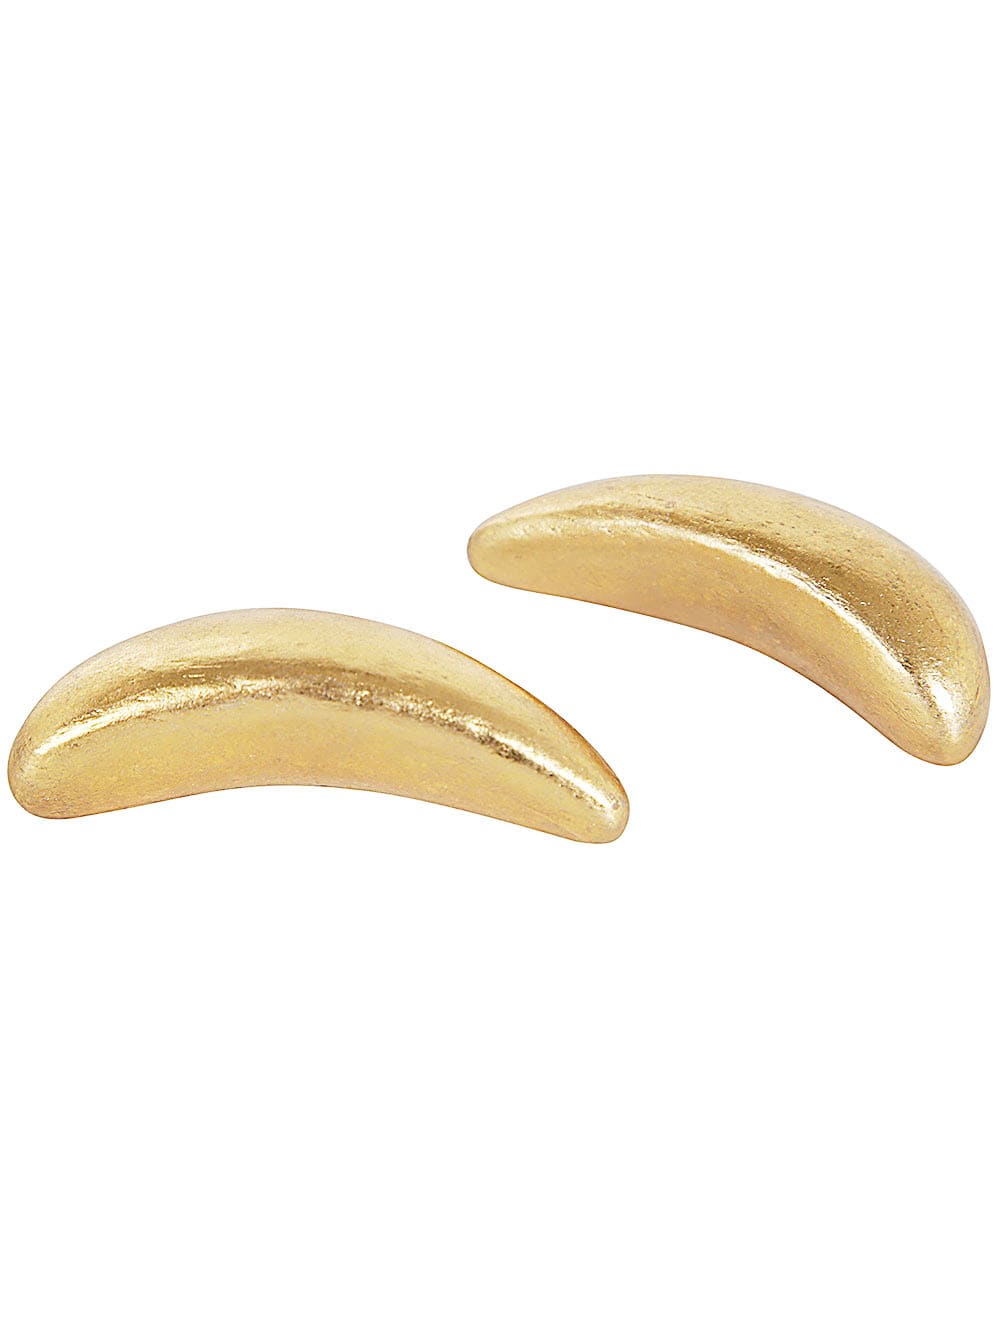 Monies Helion Earring Accessories In Gold